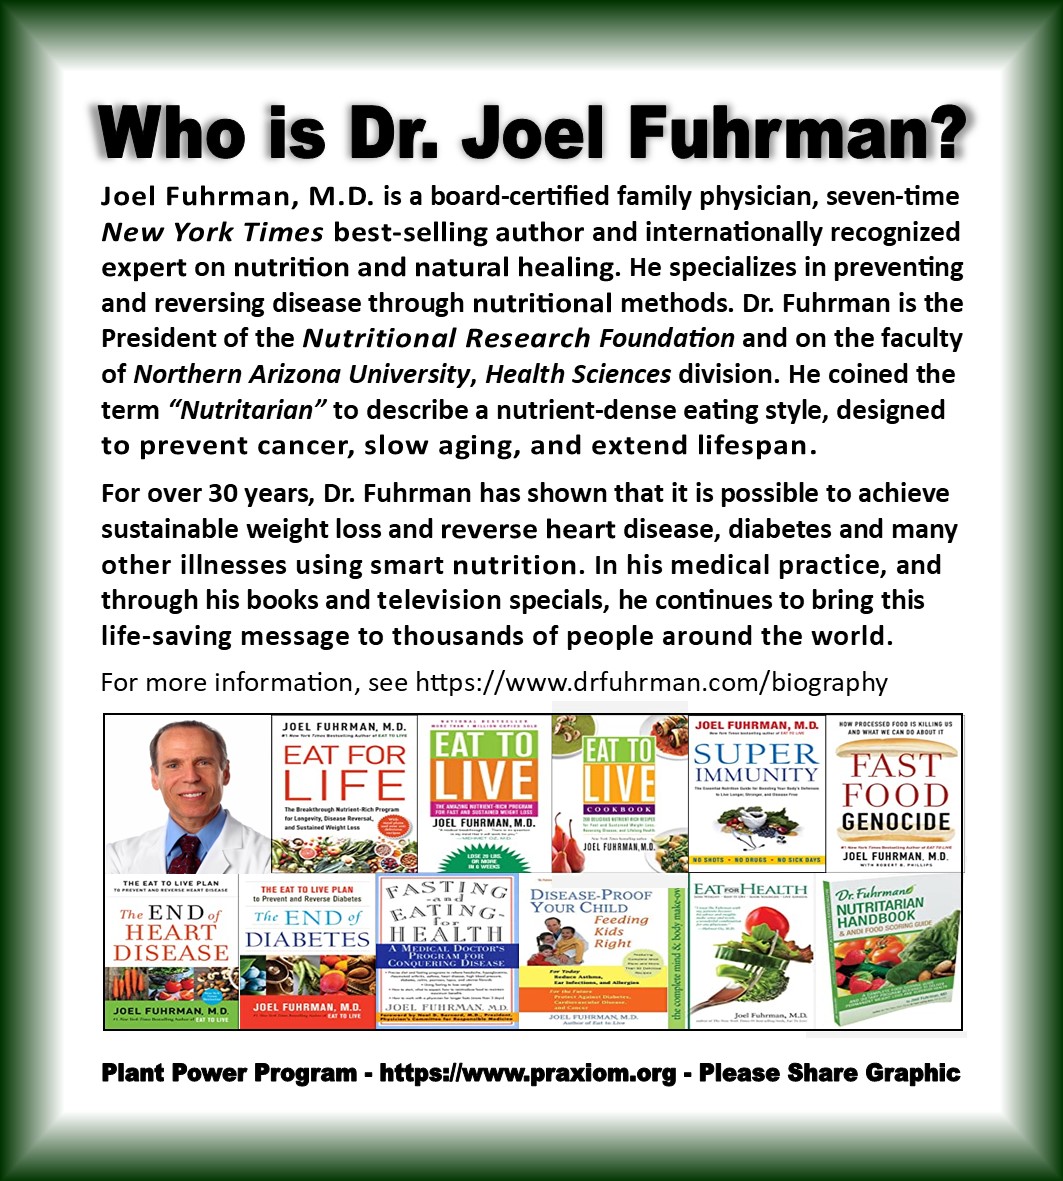 Who is Dr. Joel Fuhrman?